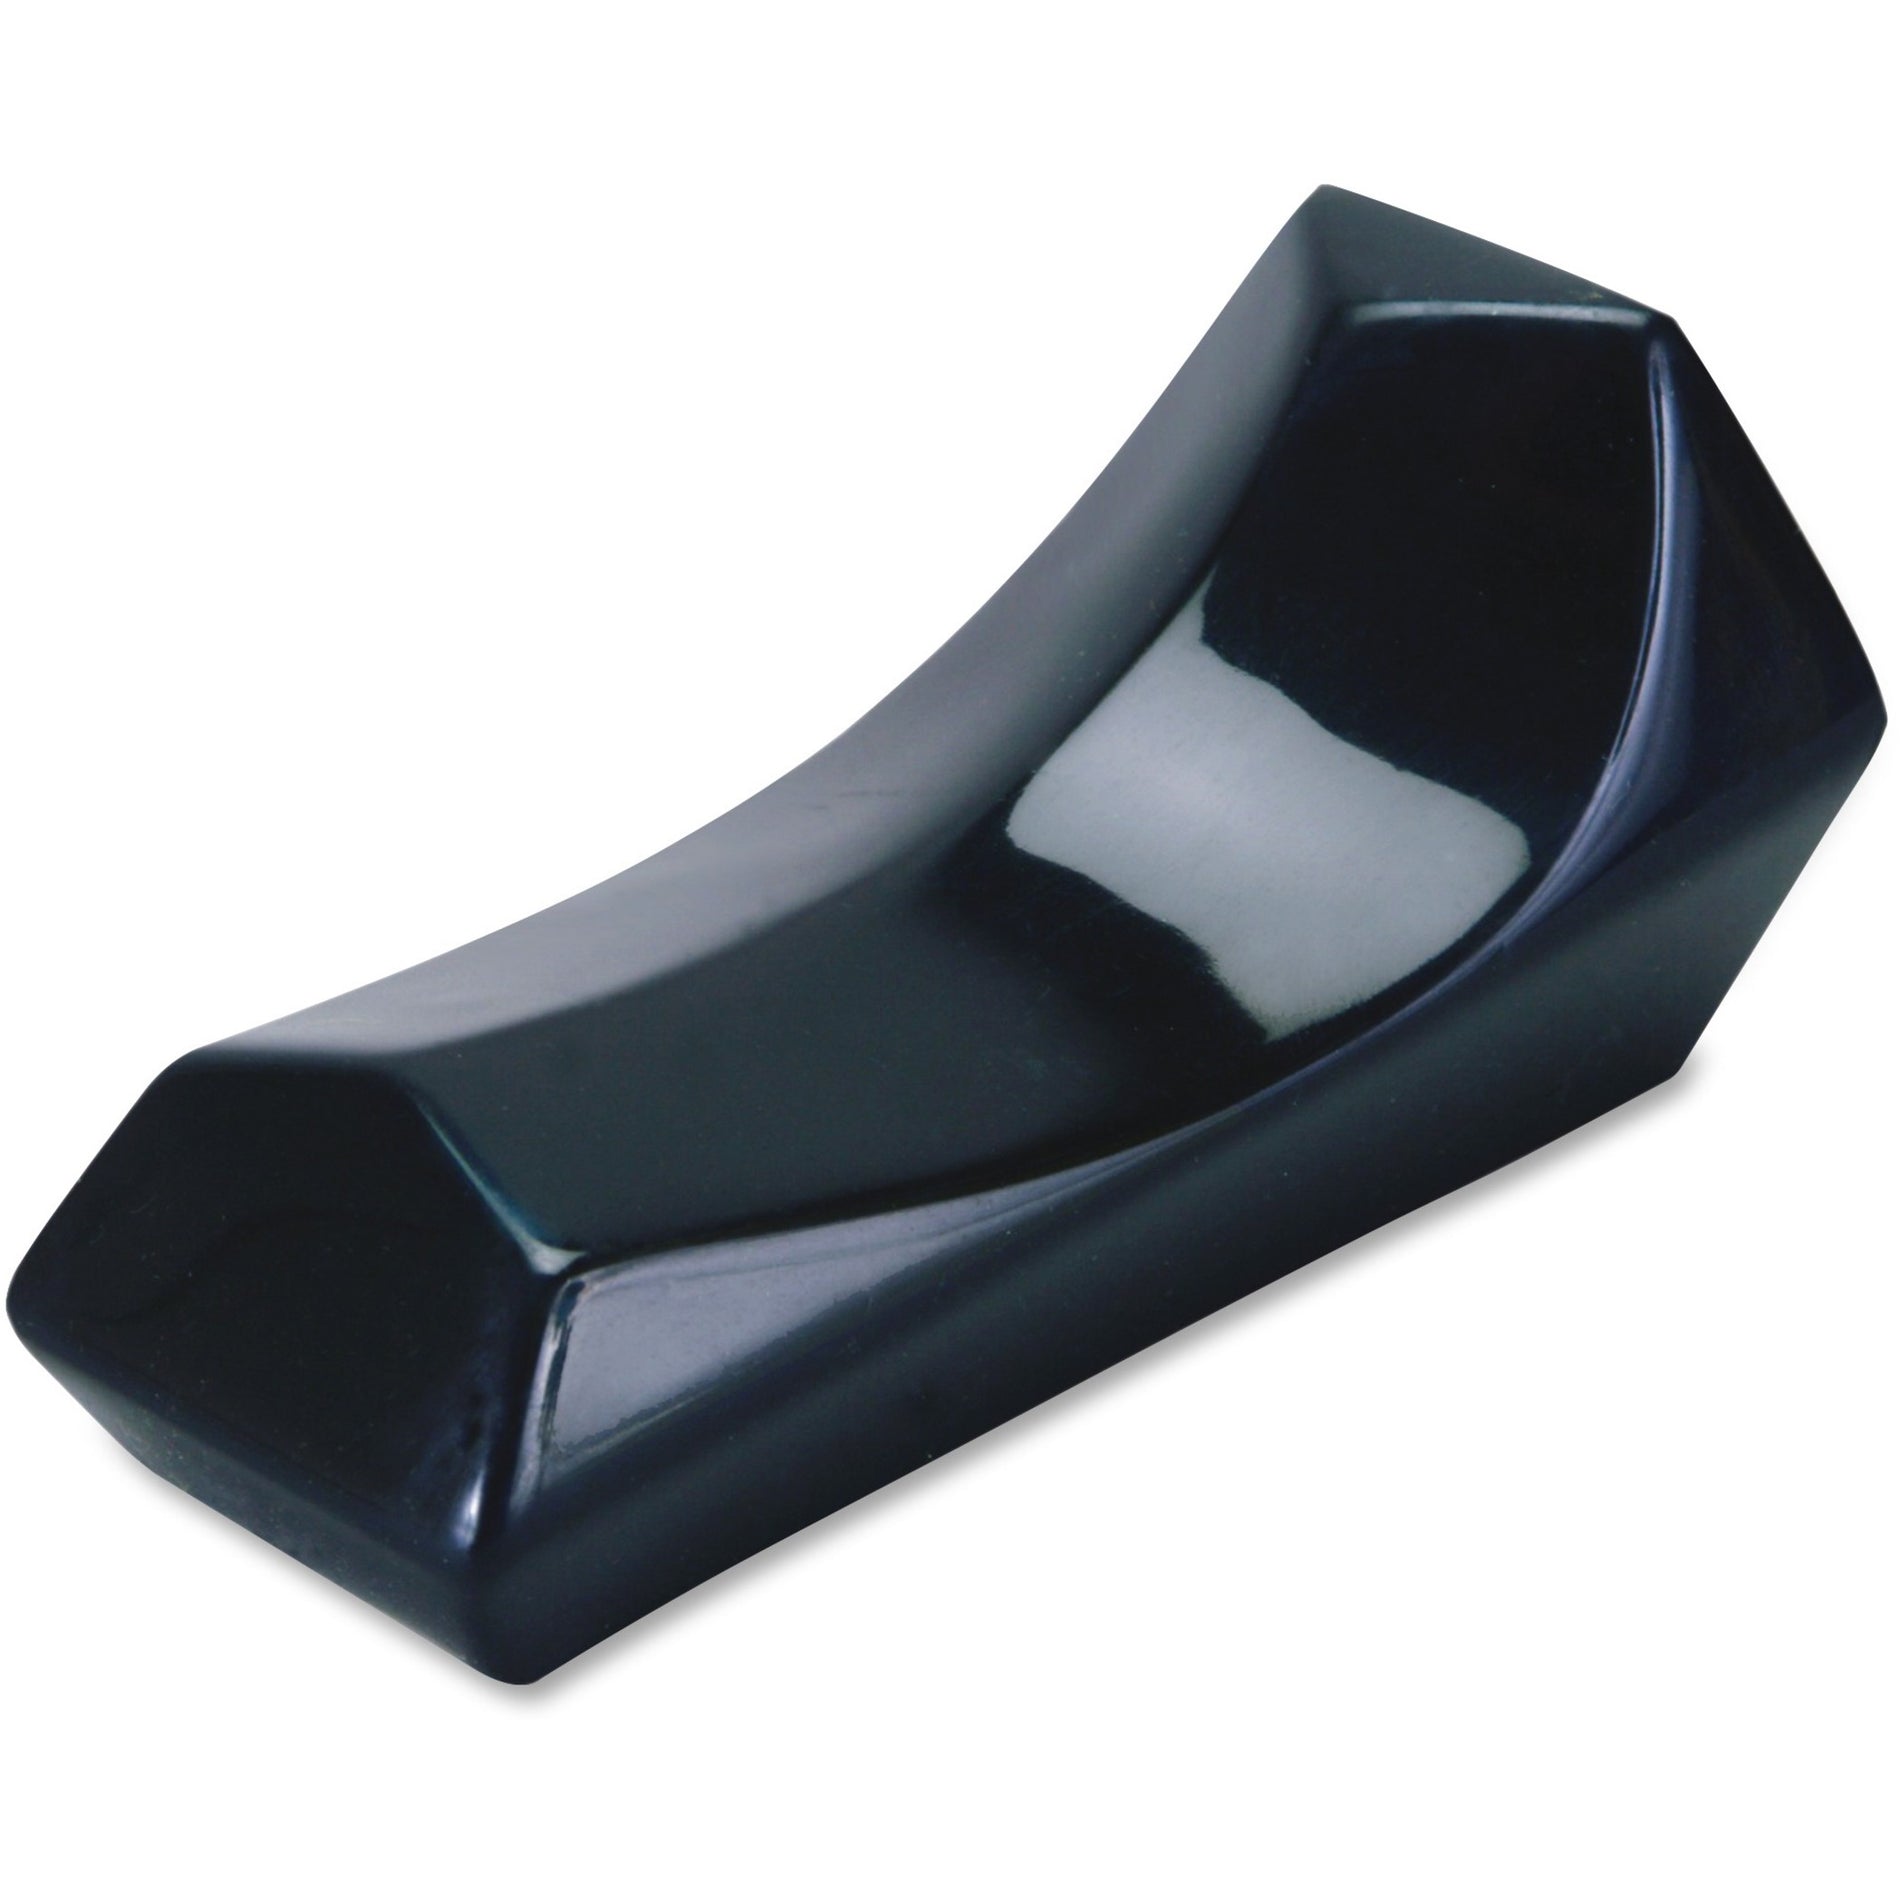 Softalk 00301M Mini- Shoulder Rest, Black - Self-adhesive, Comfortable, Cushioned, Non-slip, Antimicrobial